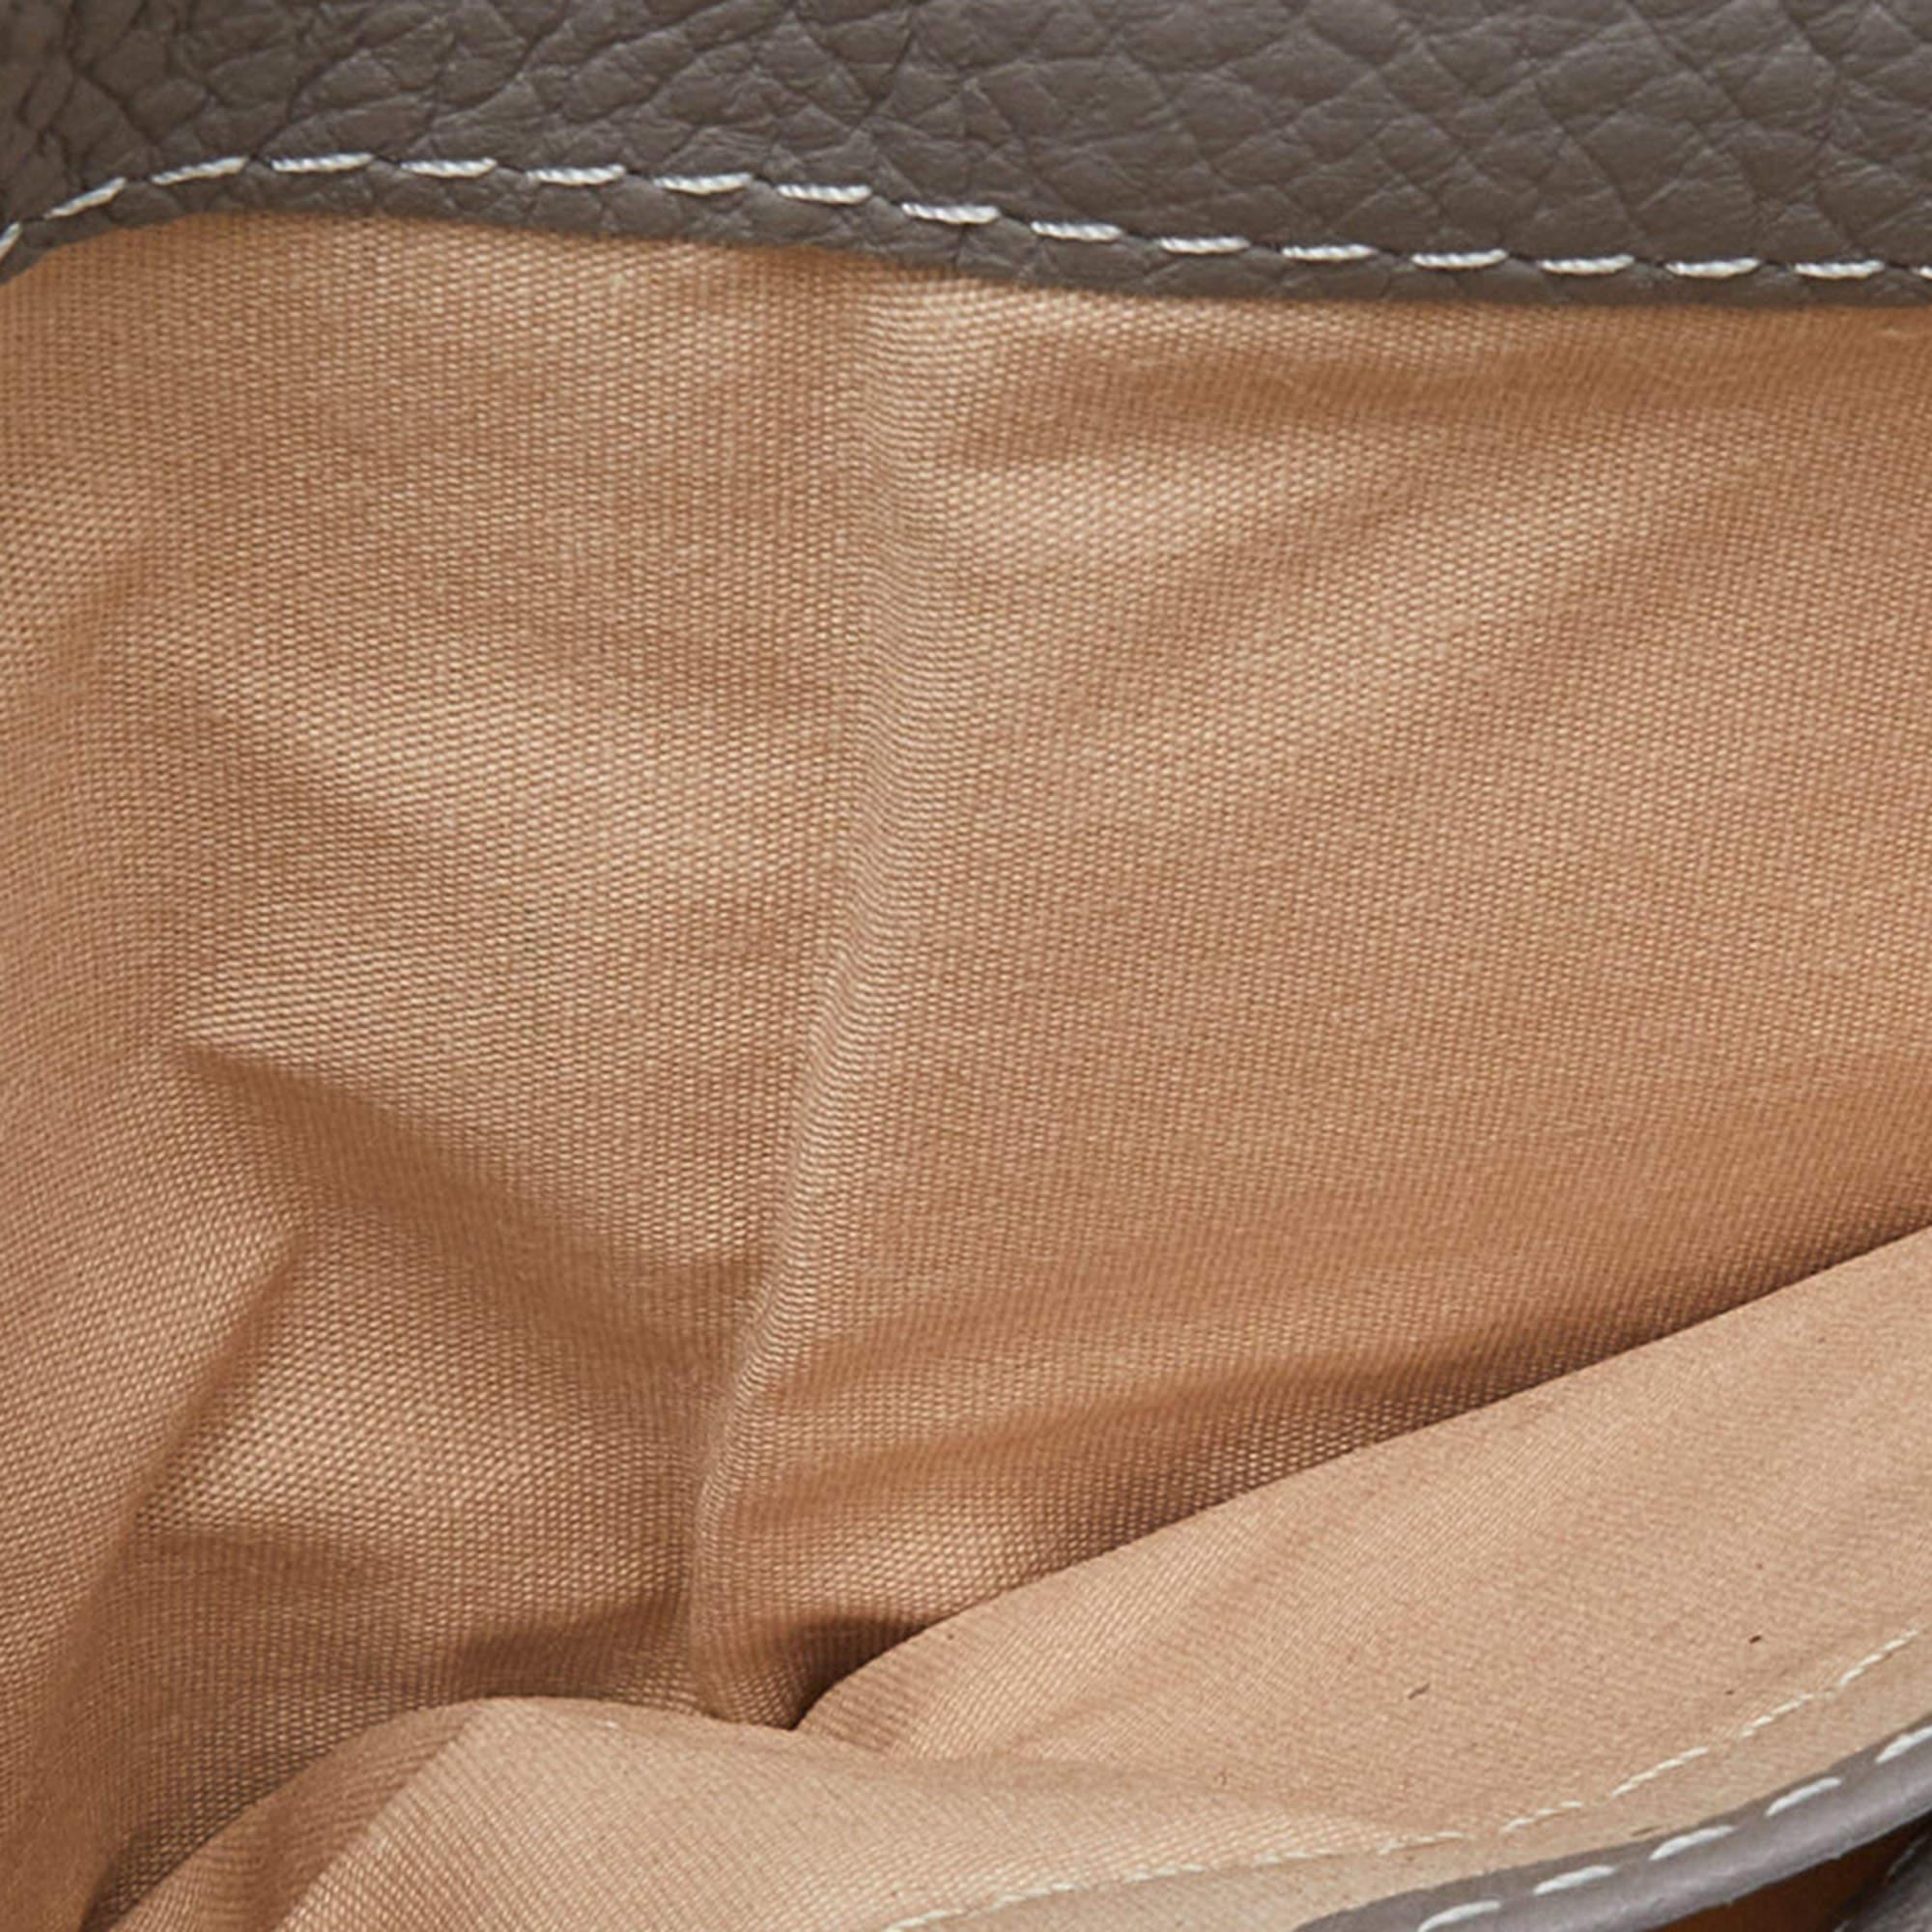 Chloe Grey Leather Marcie Compact Wallet In Excellent Condition For Sale In Dubai, Al Qouz 2